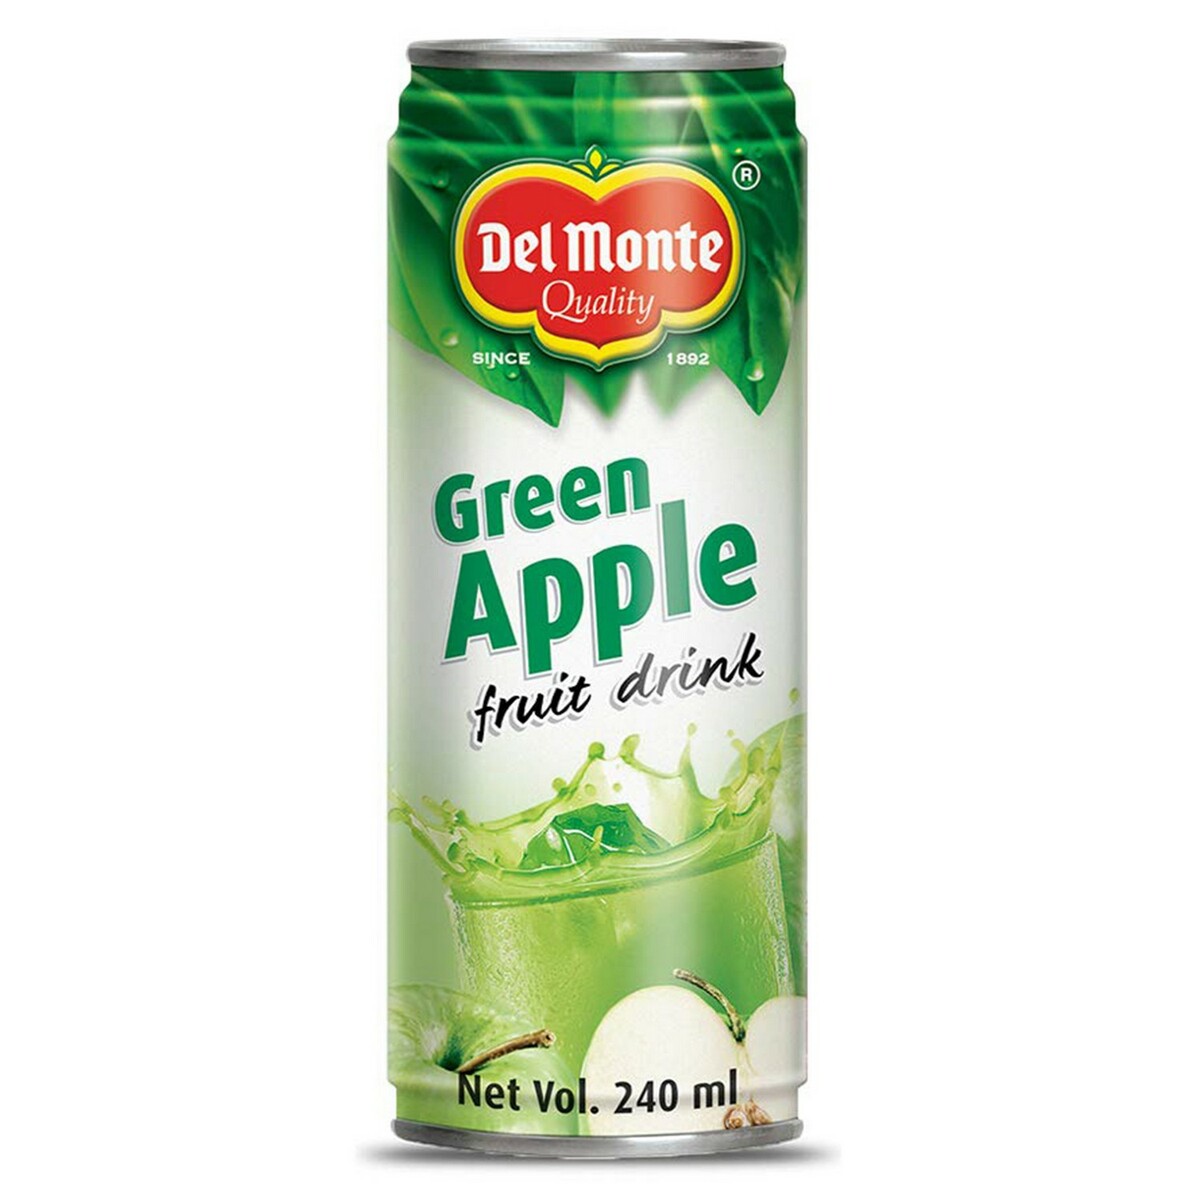 Delmonte Quality Green Apple Fruit Drink 240ml